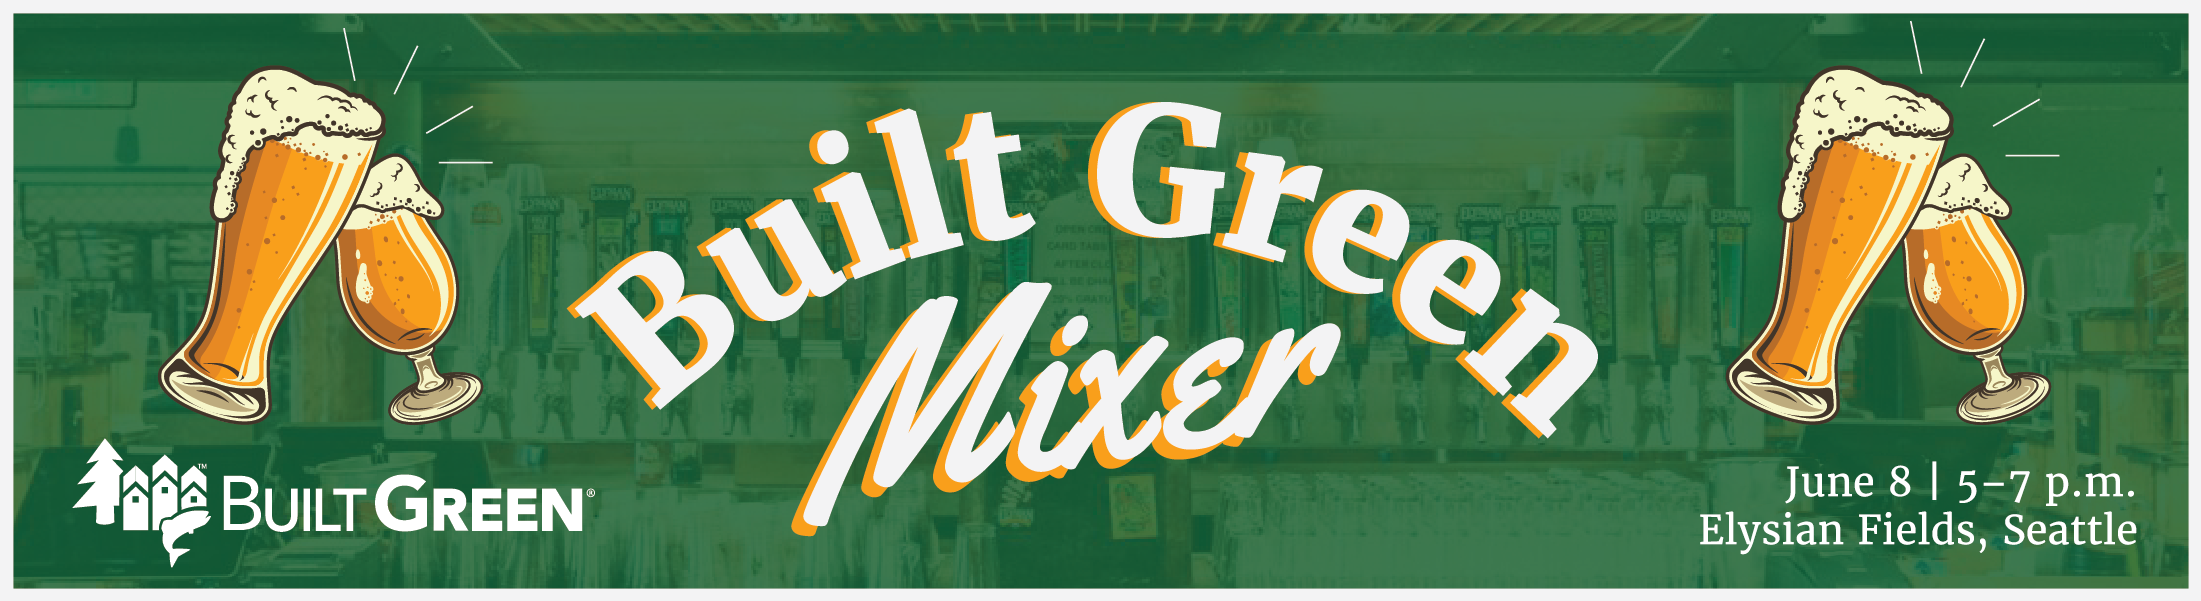 Built Green Mixer